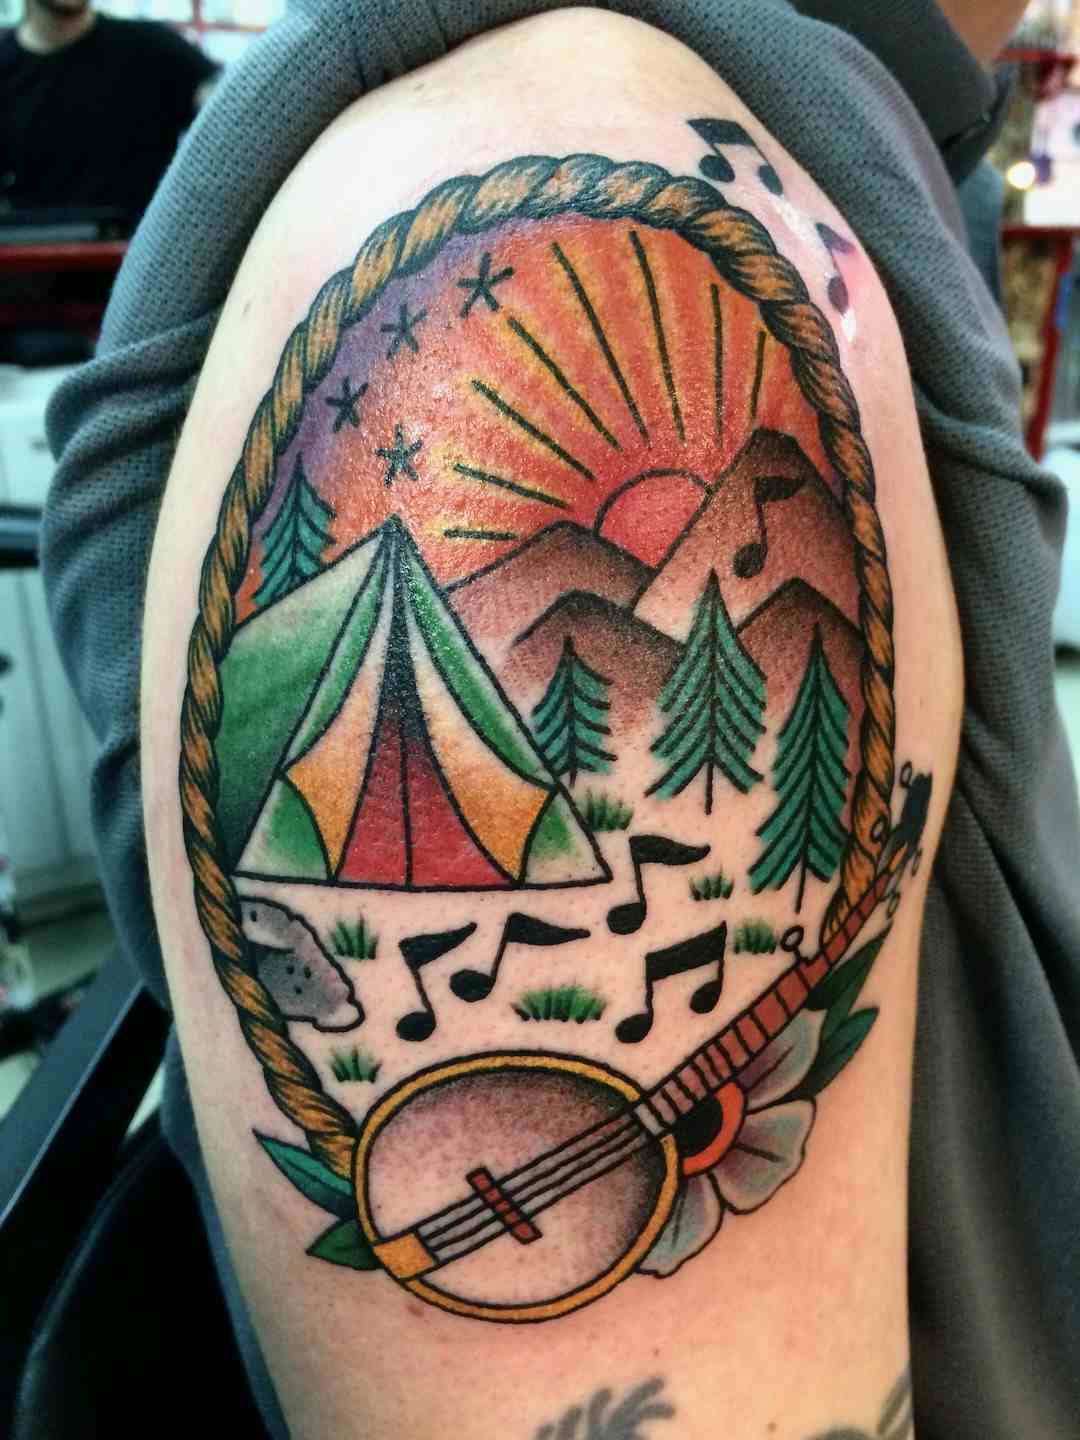 Banjo mountain camping tattoo